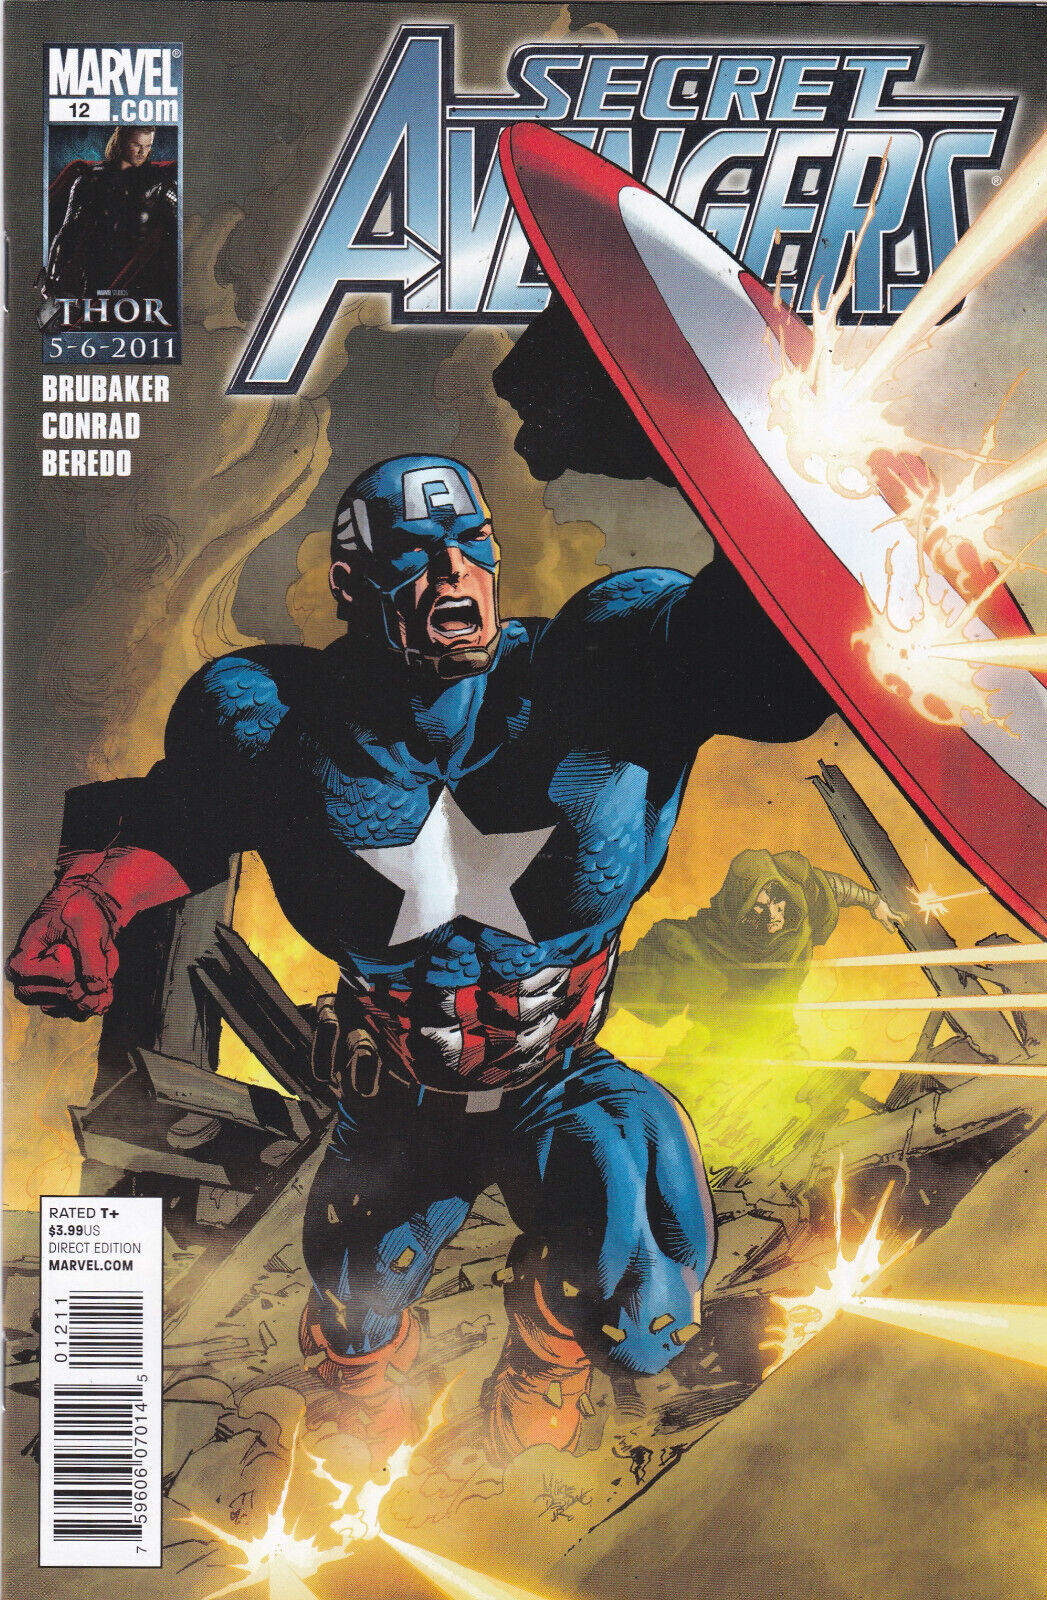 Secret Avengers #12 Vol. 1 (Marvel, 2011) ungraded, High Grade